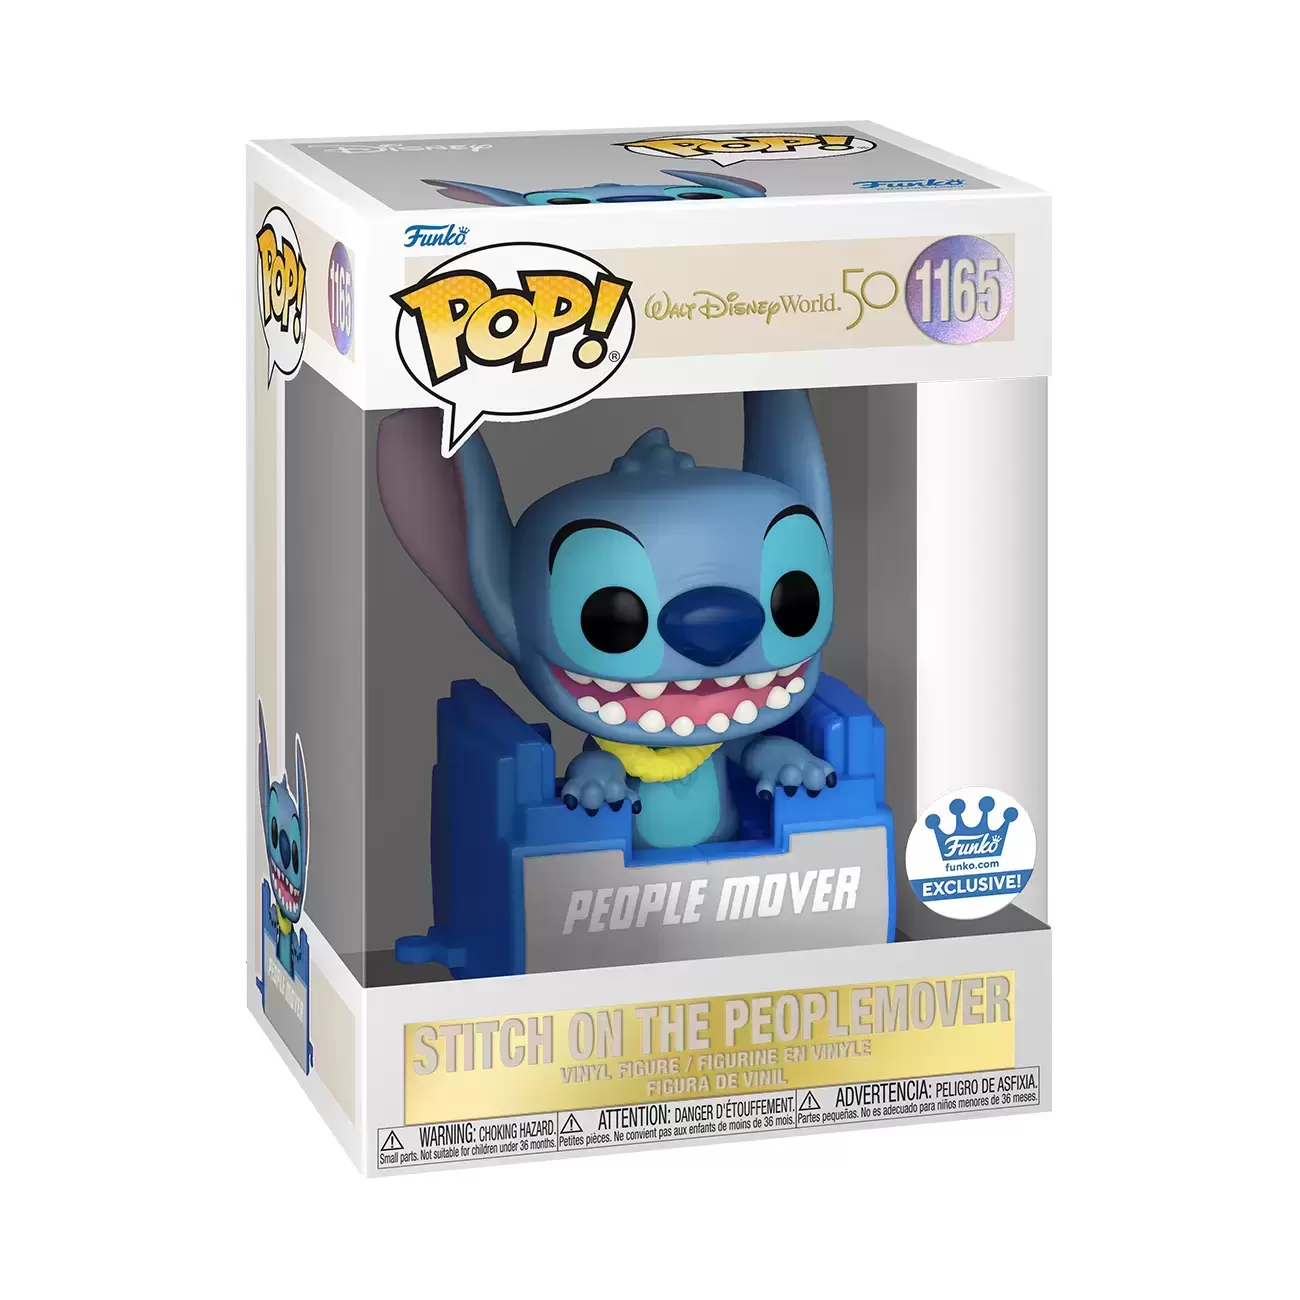 POP! Disney - Disney World 50th Anniversary - Stitch on The People Mover